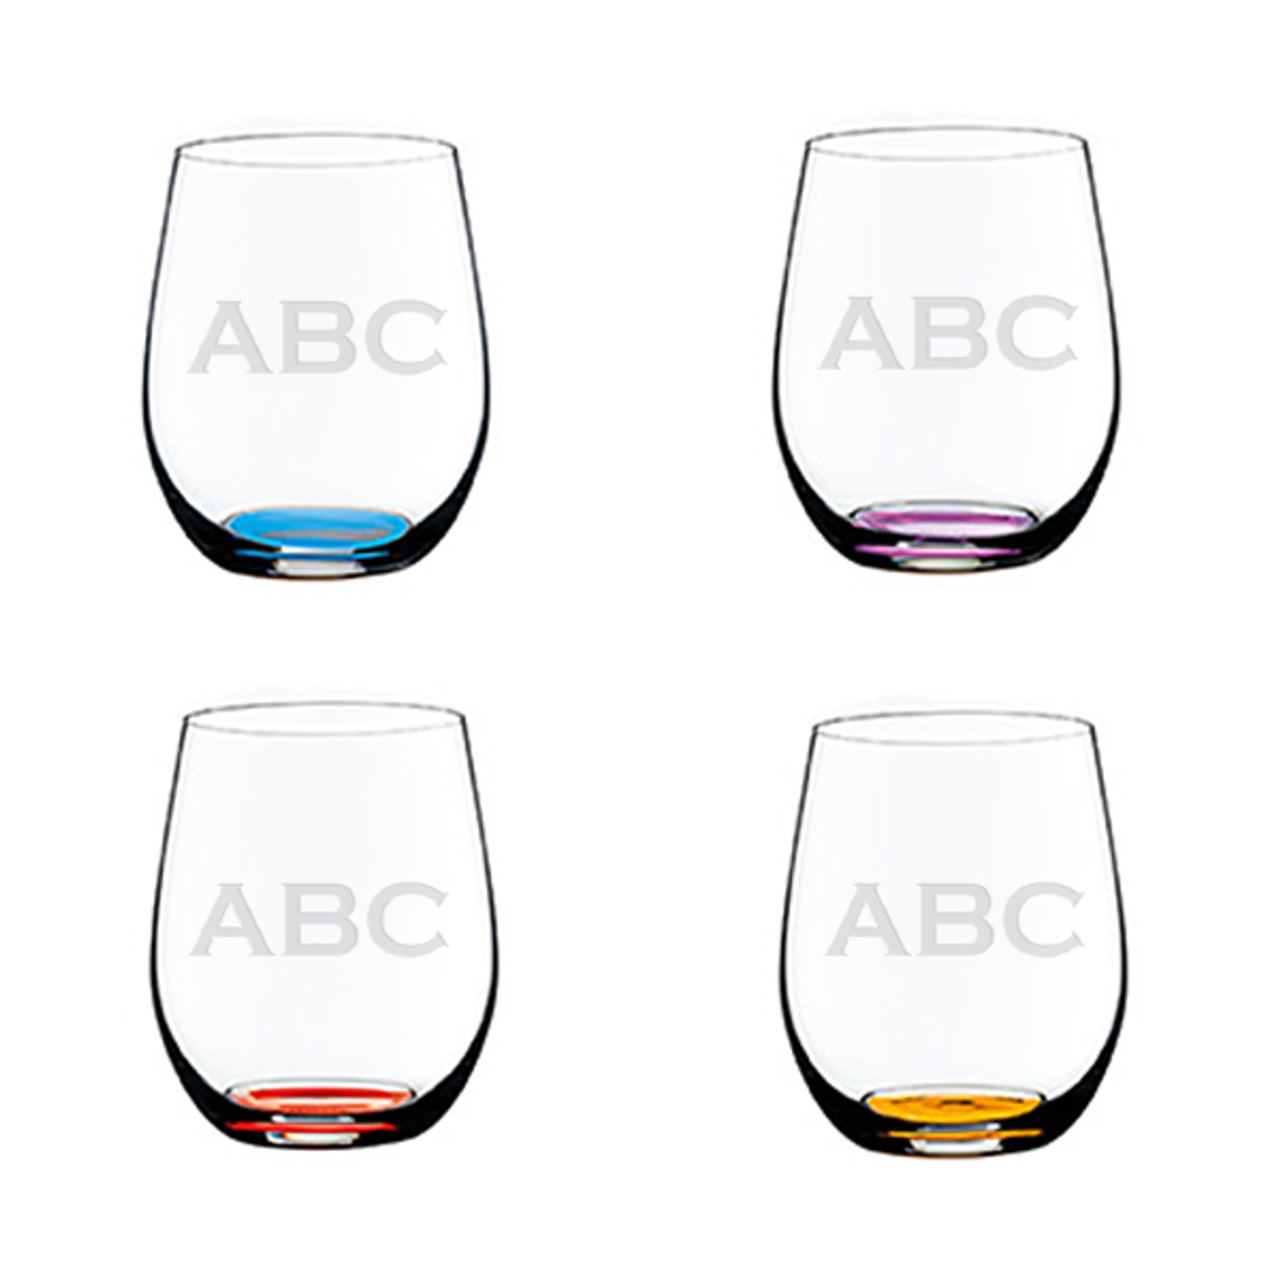 Monogrammed Wine Glasses Set of 4